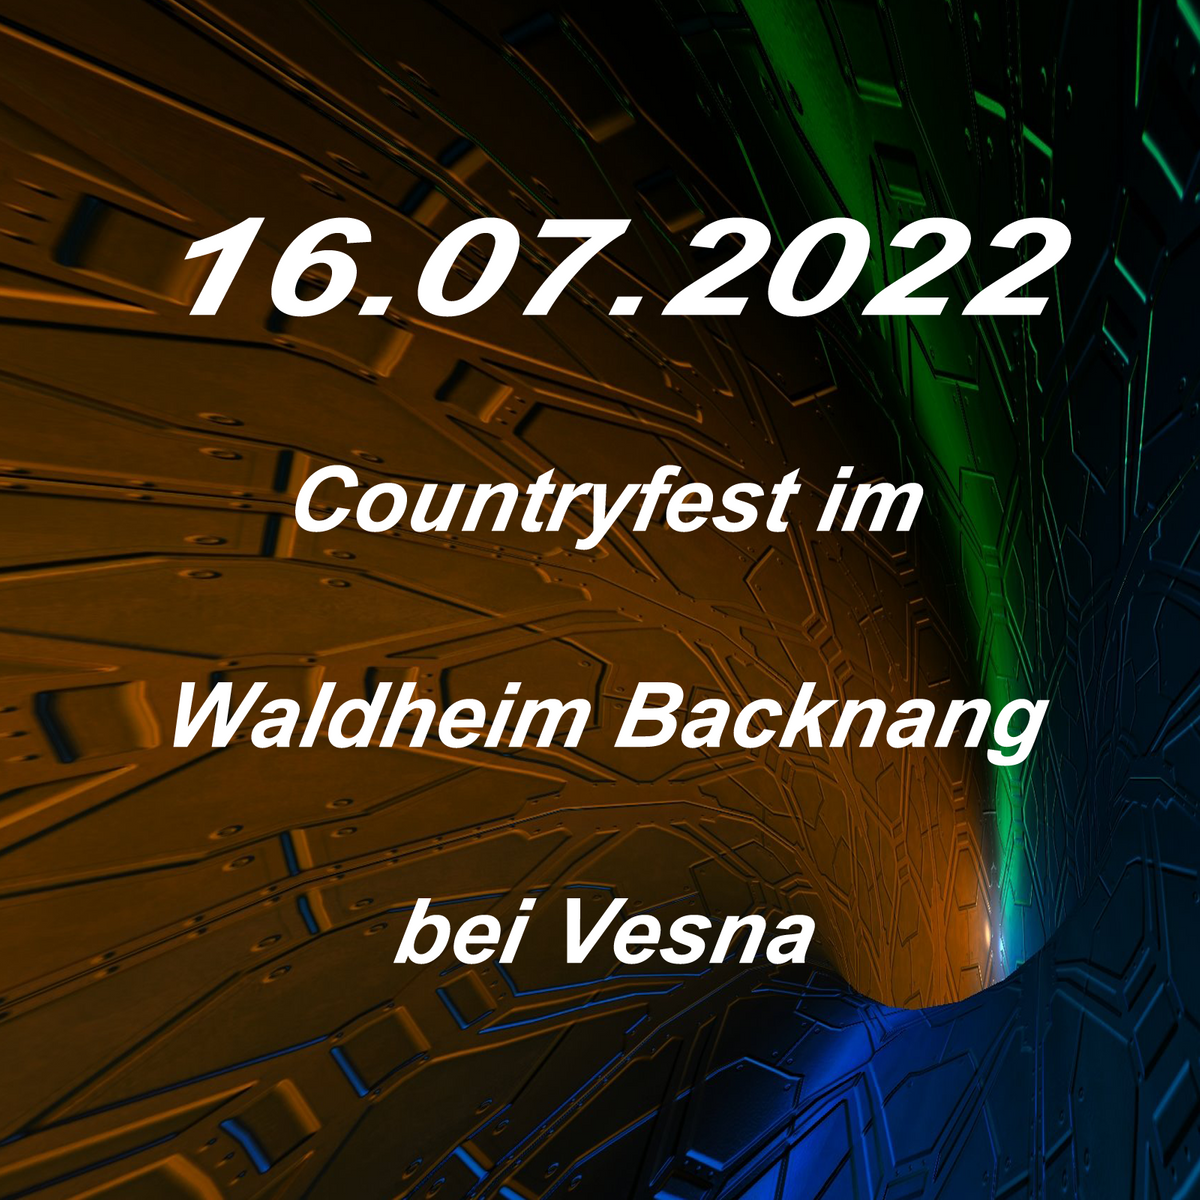 Text_16.07.2022 Countryfest im Waldheim Backnang bei Vesna